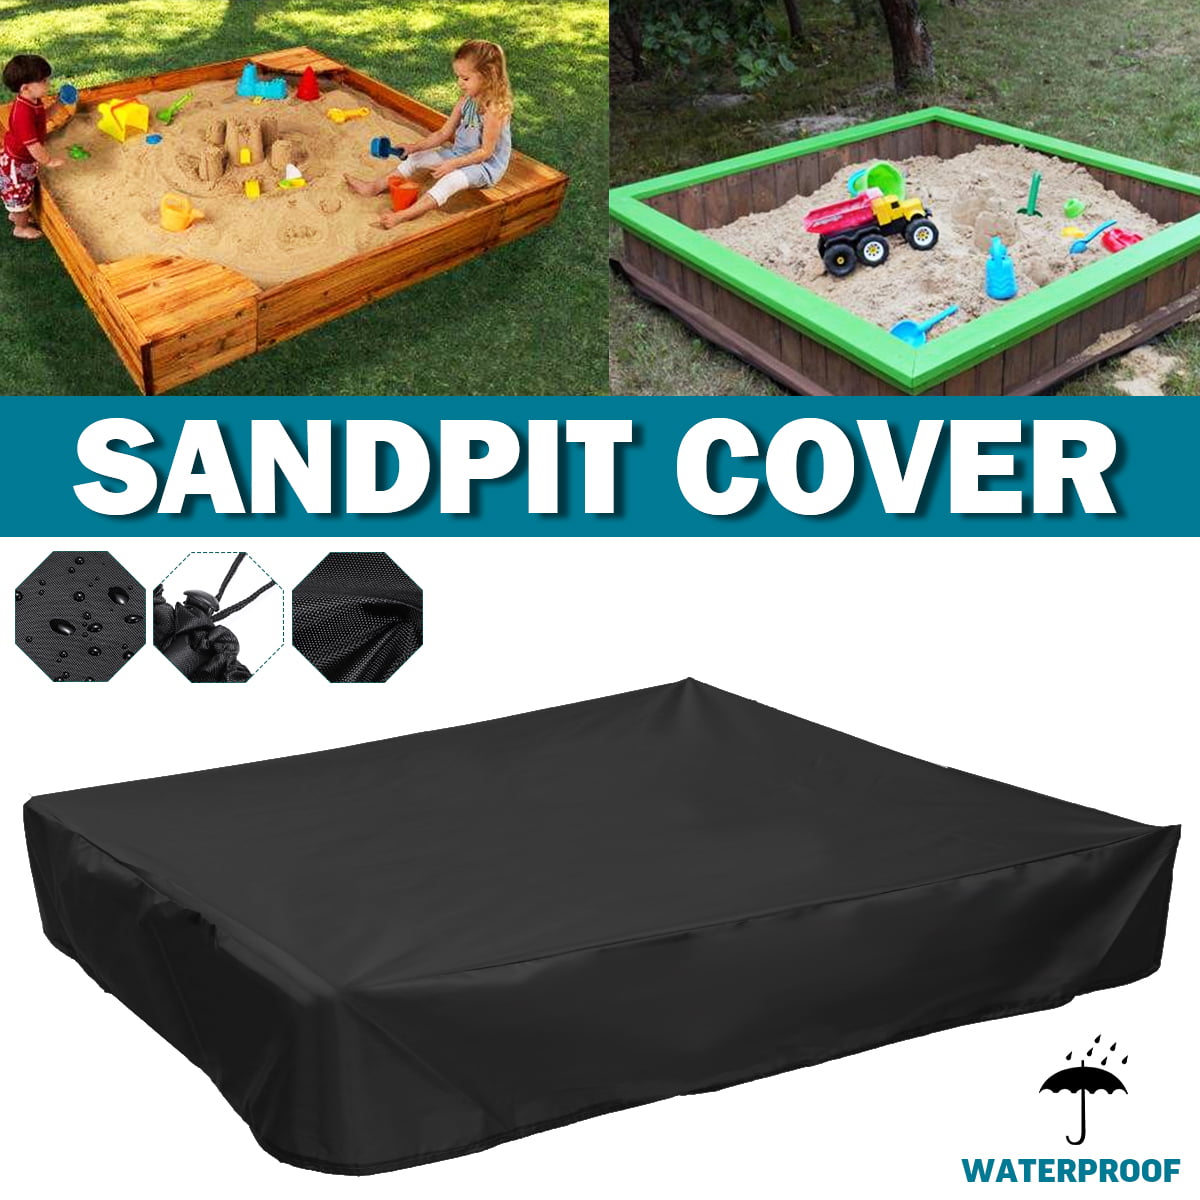 Waterproof Garden Sandbox Cover Sandpit Protective Cover SunshineFace Sandpit Cover